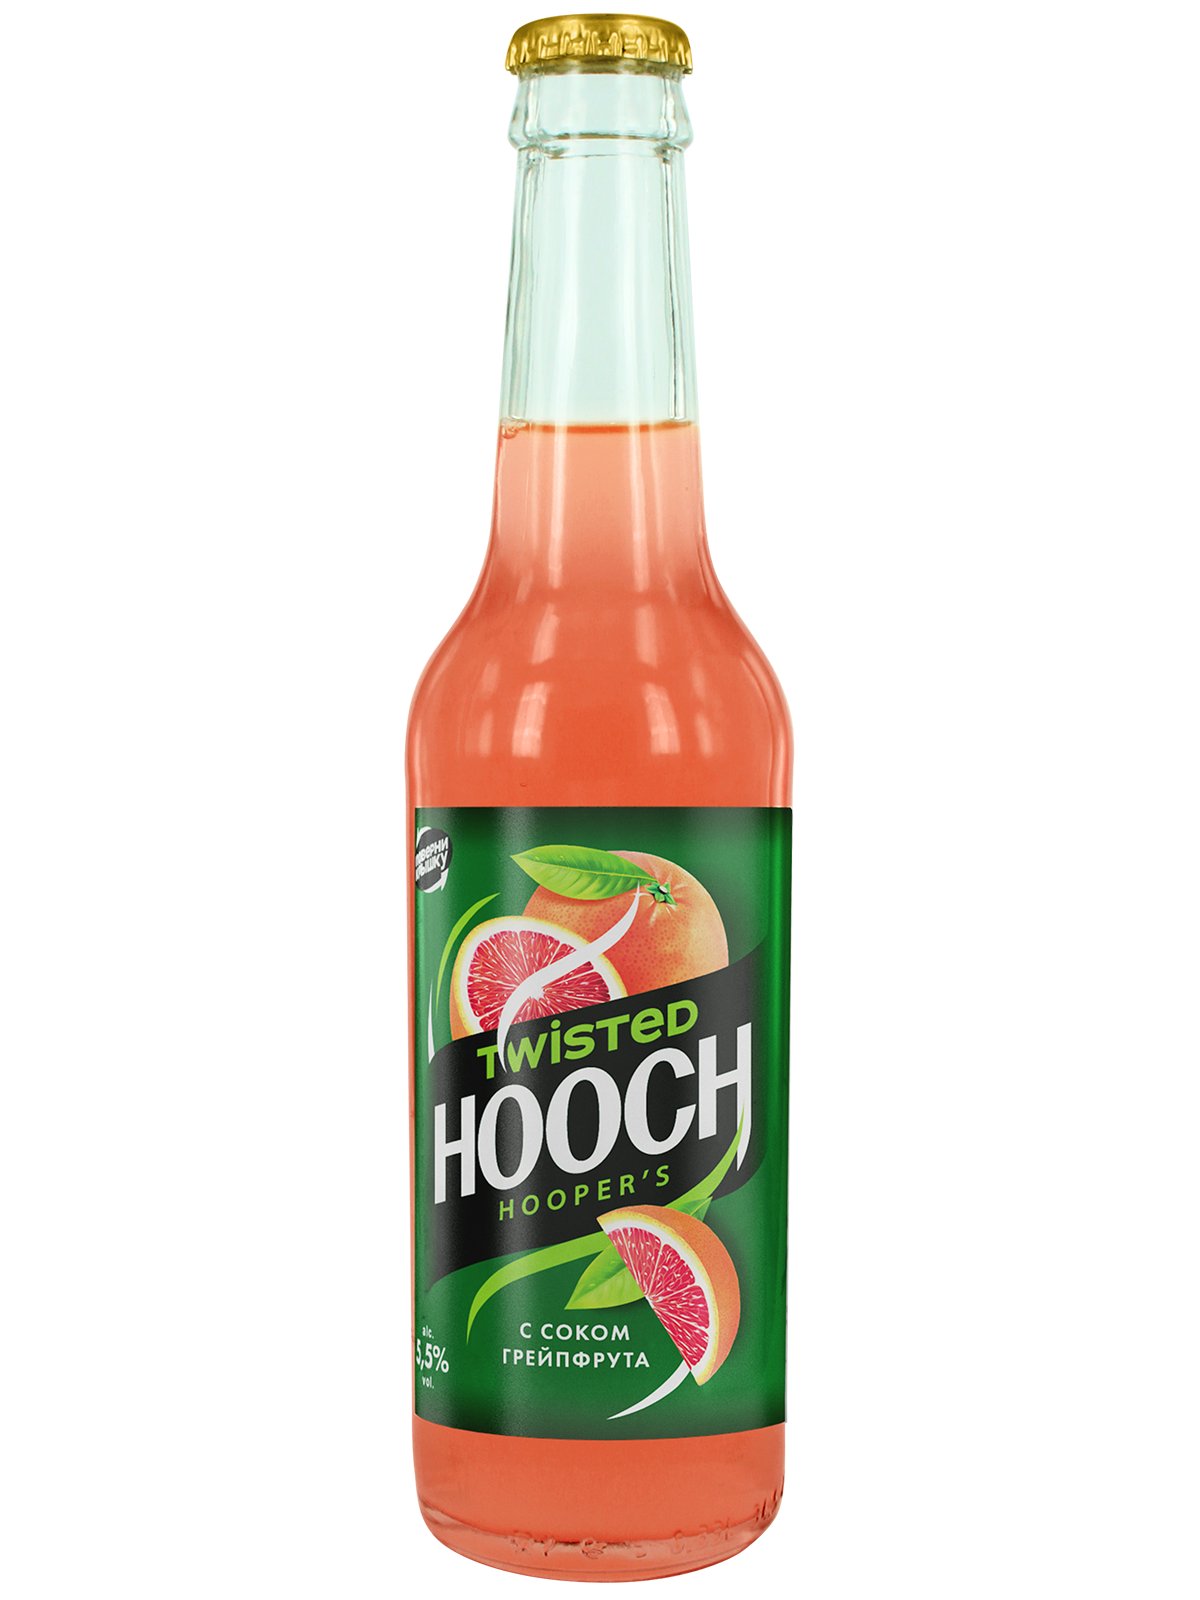 Hooch грейпфрут. Коктейль Хуч грейпфрут. Алкогольный напиток с грейпфрутом Hooch. Пиво Hooch грейпфрут. Пиво hooch